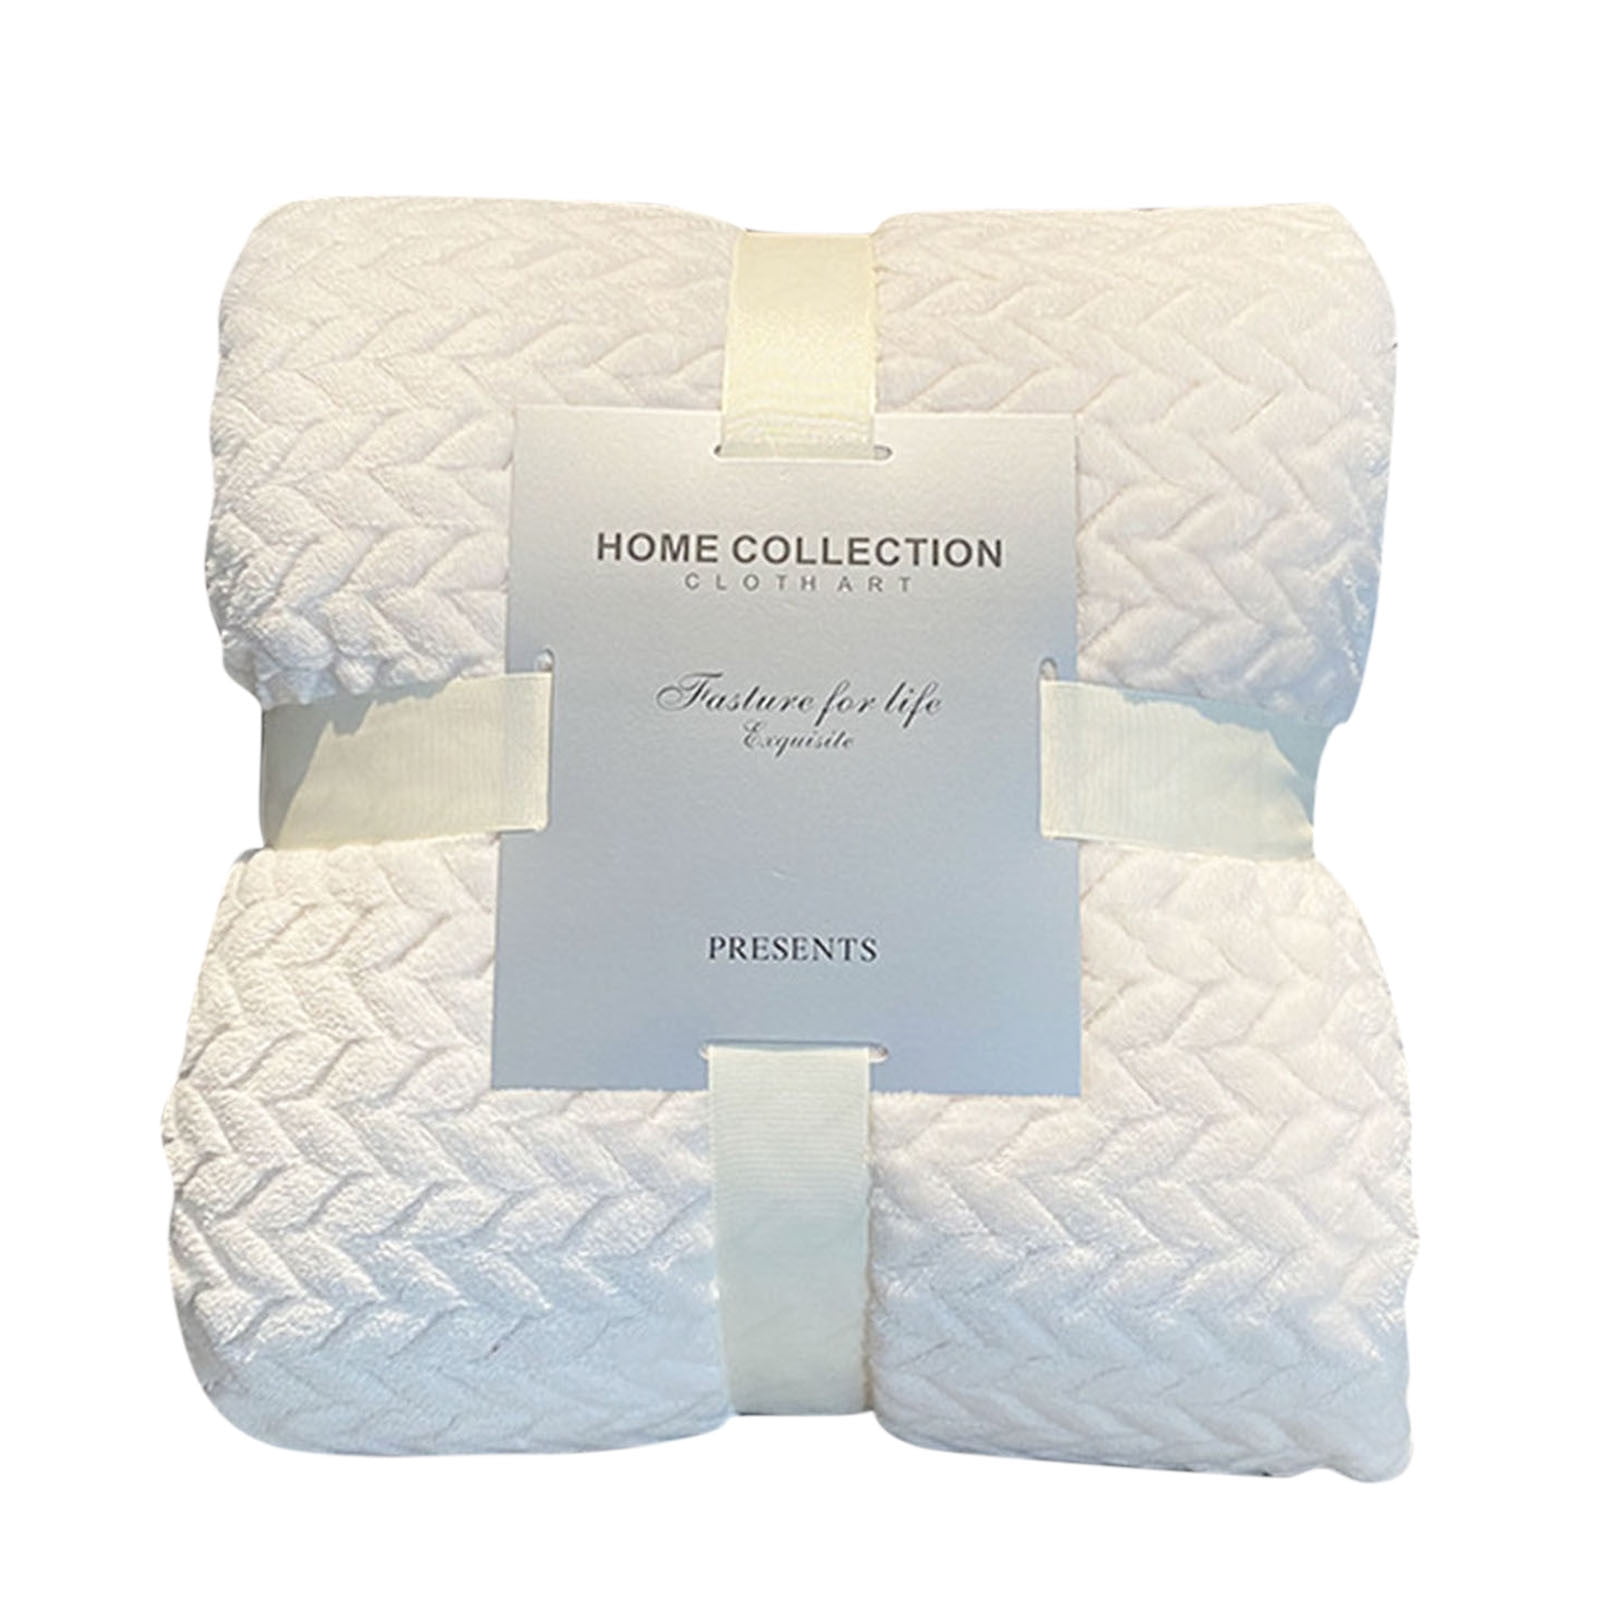 TKM Home Ryan Reynolds Soft And Comfortable Warm Fleece Blanket For Sofa,  Bed, Office Knee Pad